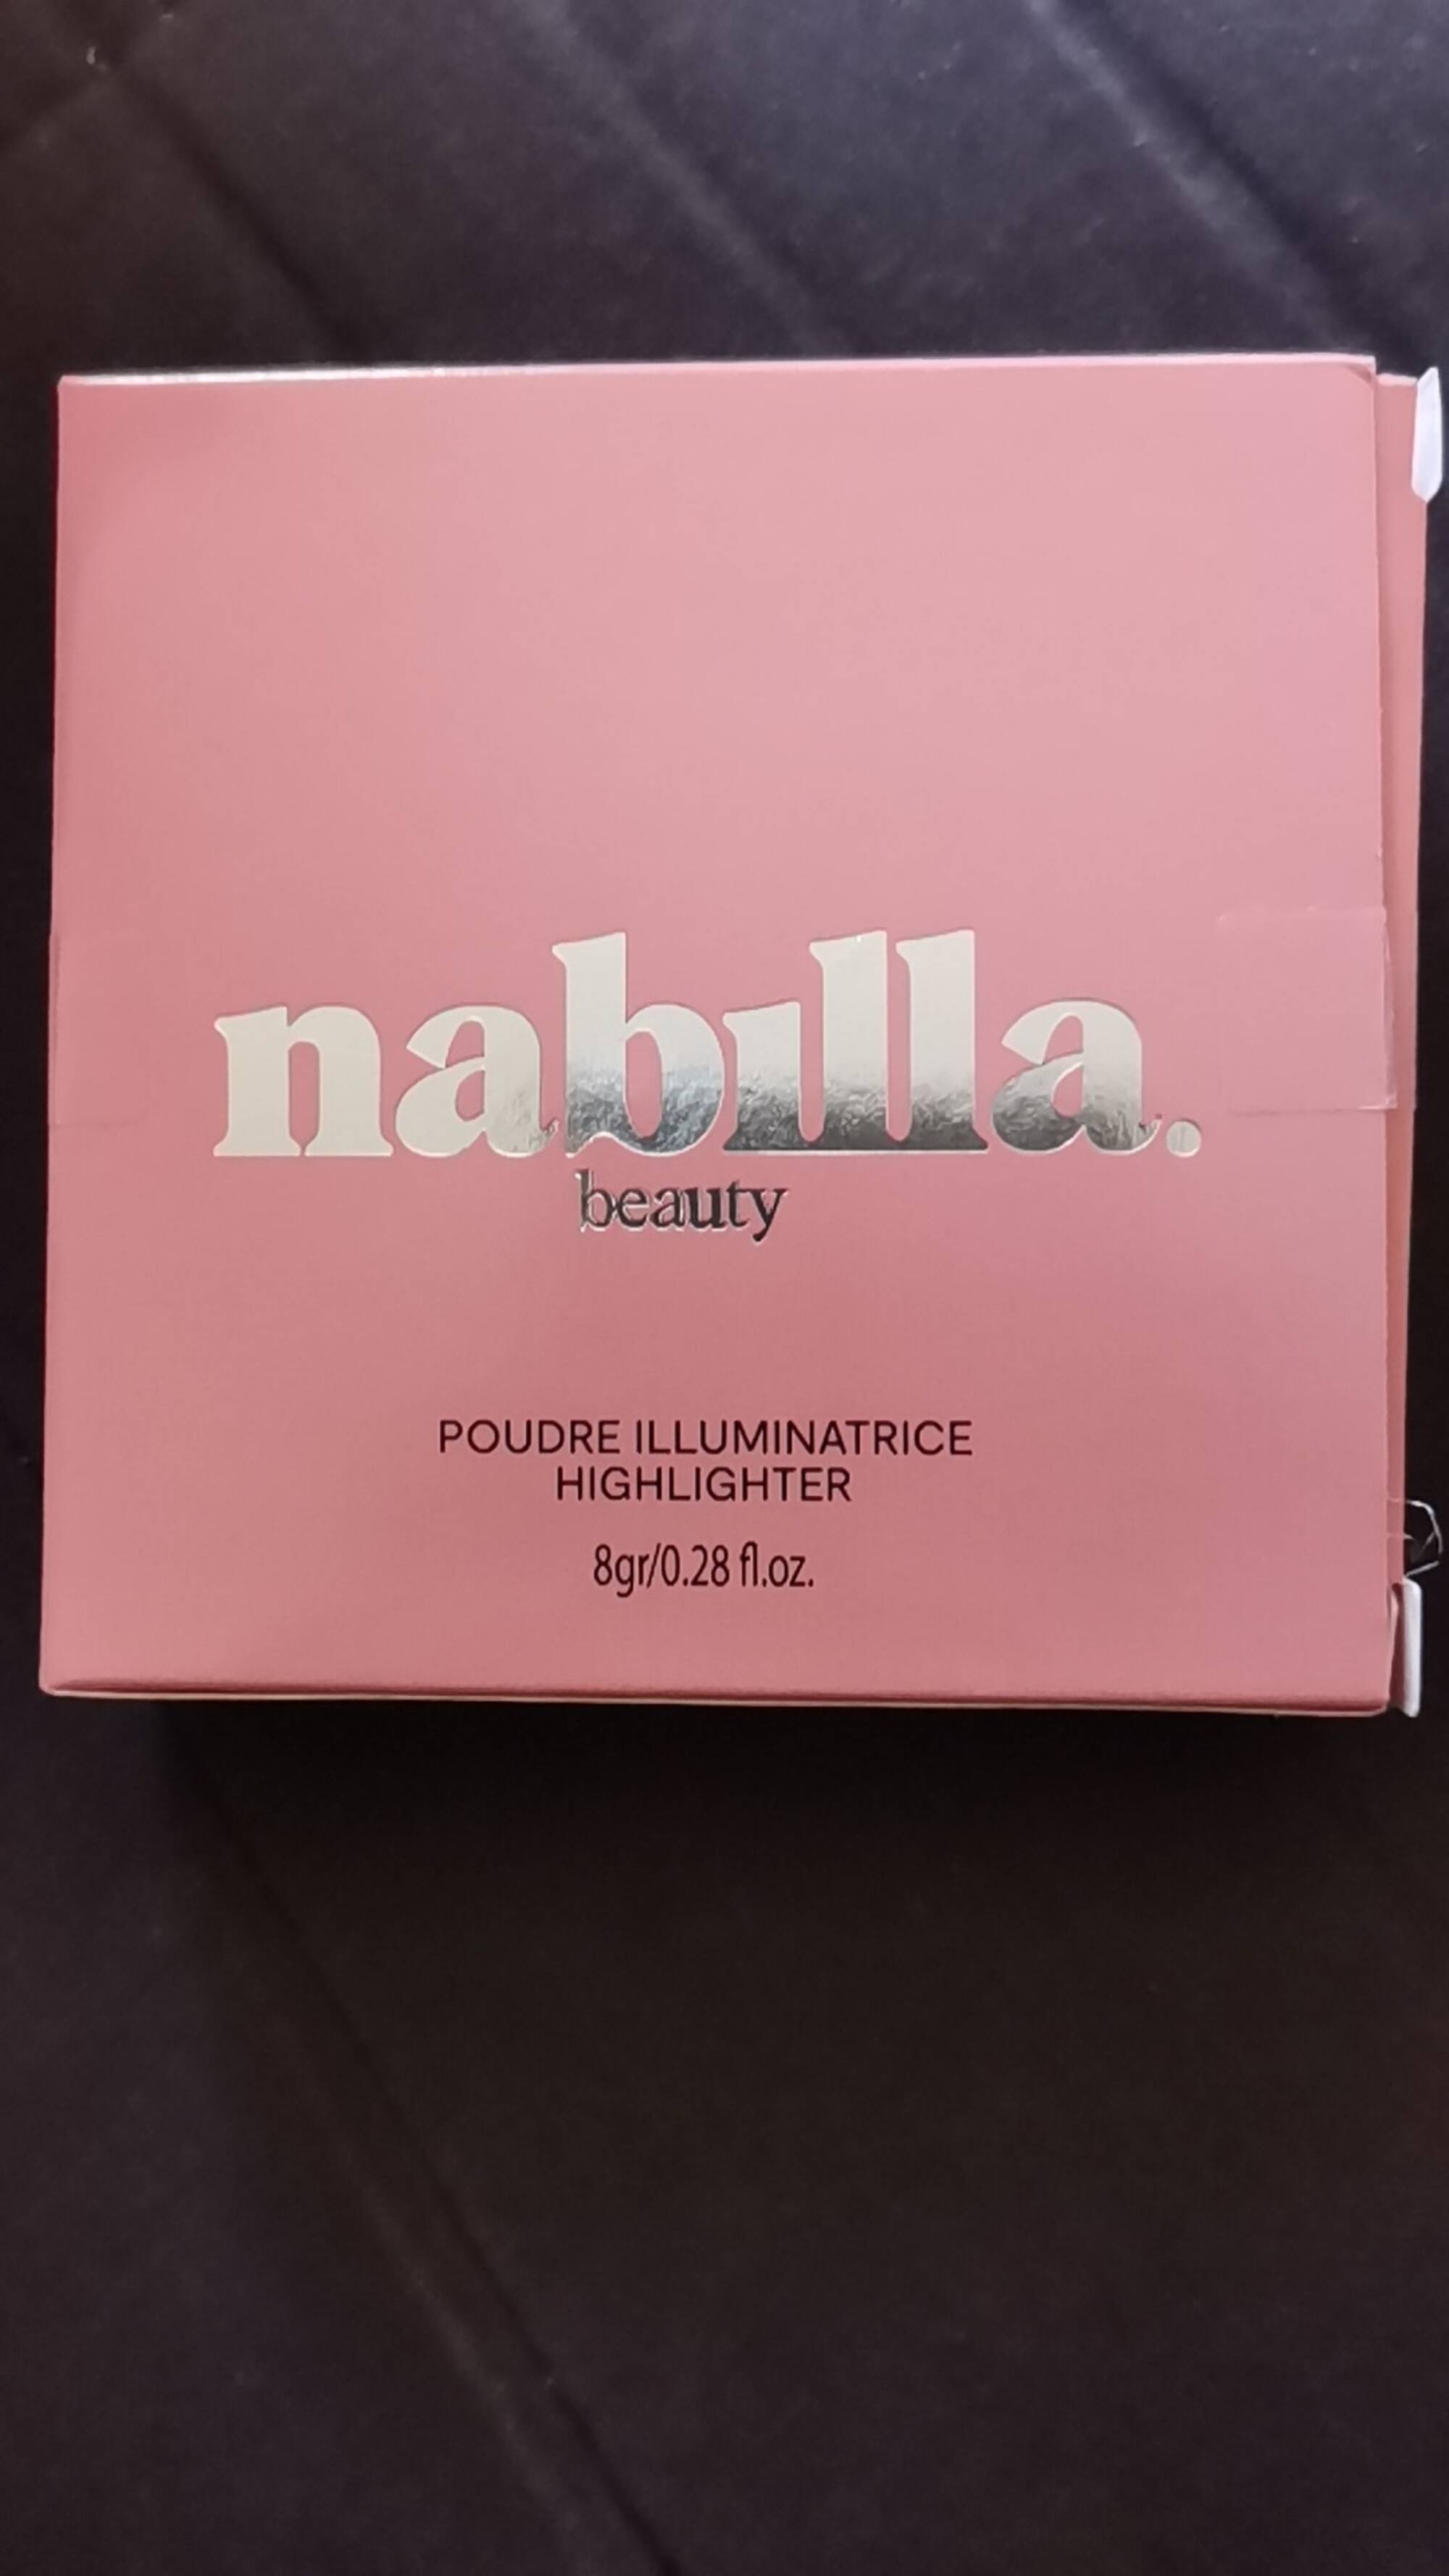 NABILLA BEAUTY - Poudre illuminatrice